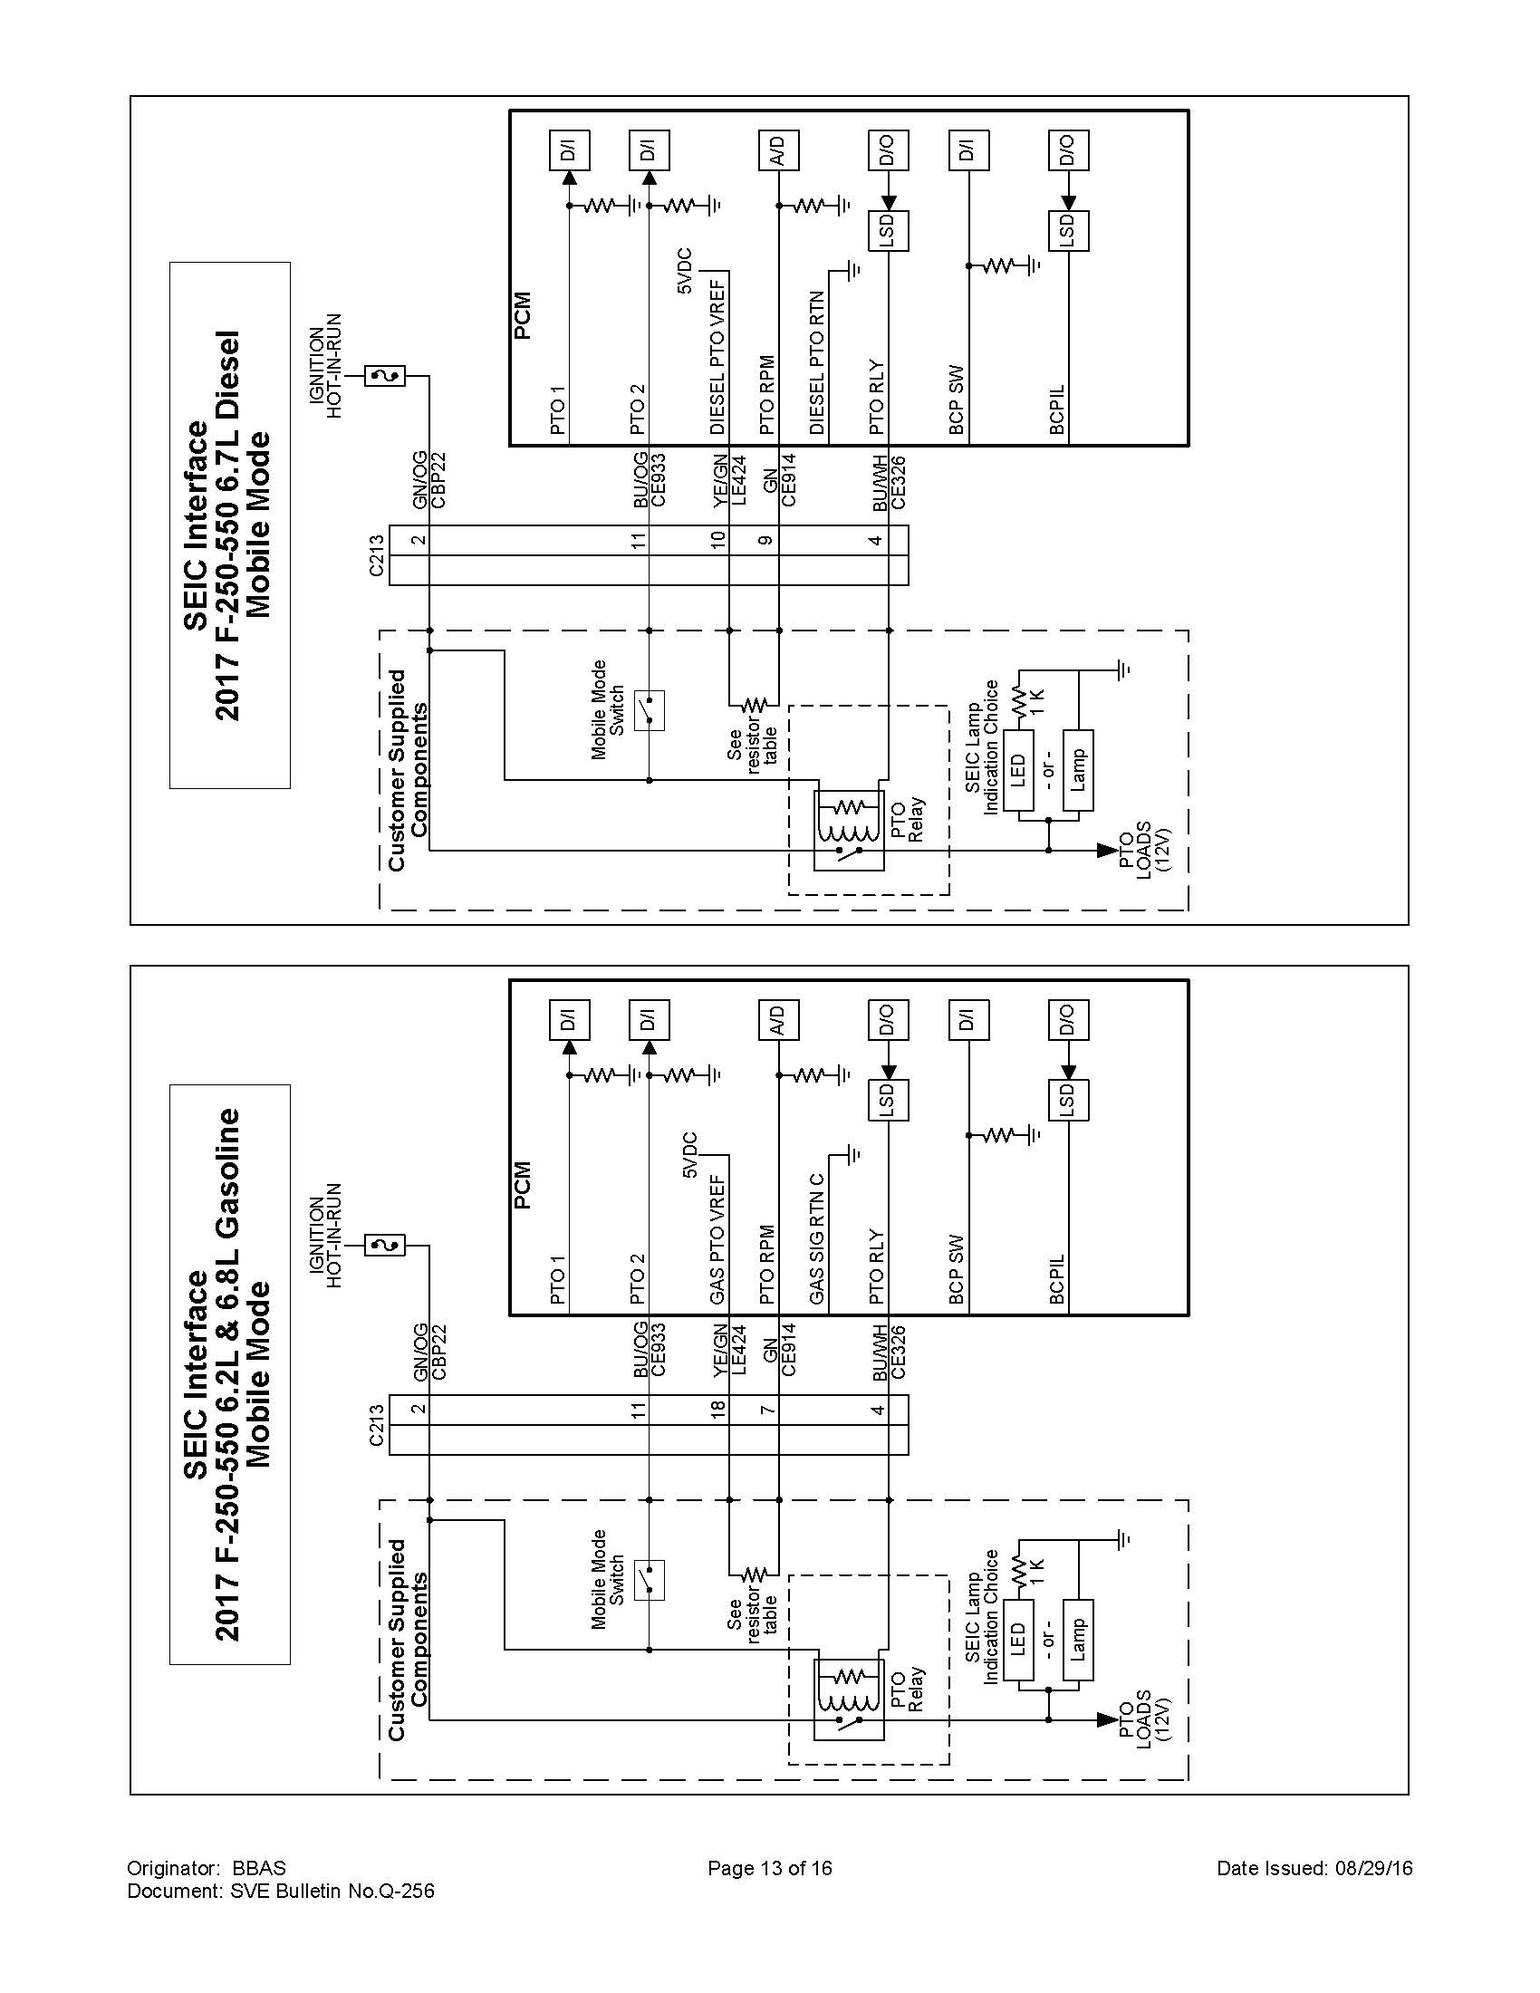 honeywell th8000 wiring diagram